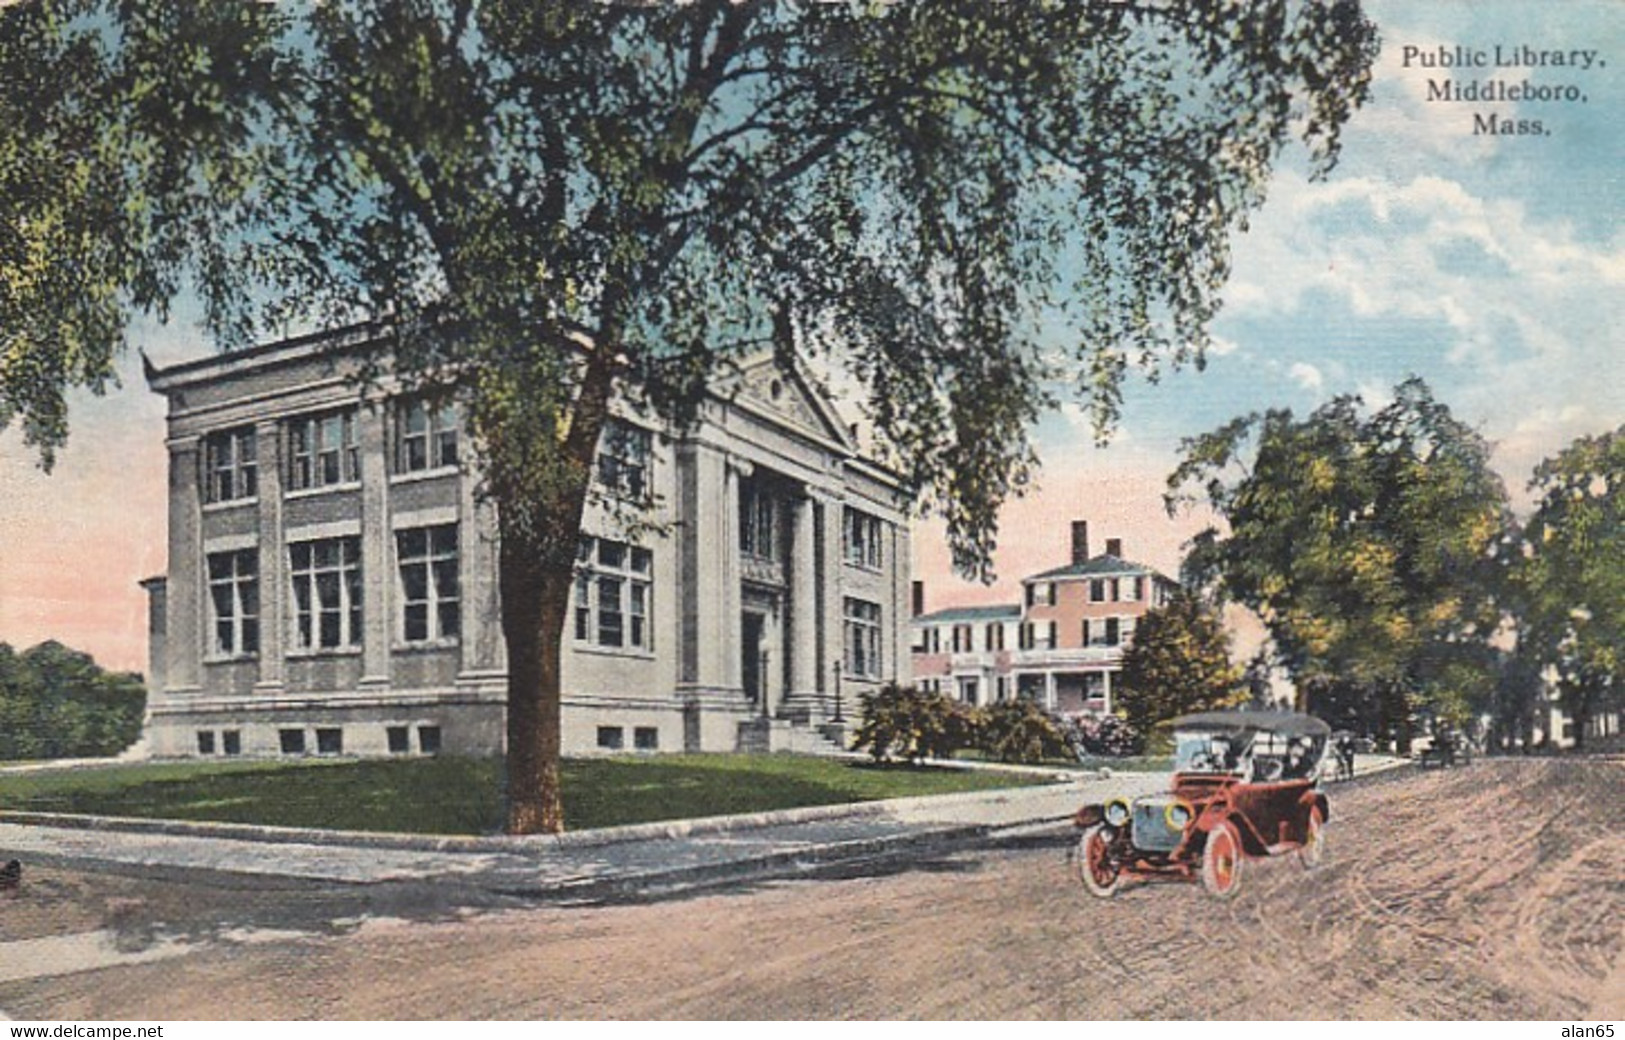 Middleboro Massachusetts, Public Library Building Architecture, C1910s Vintage Postcard - Bibliotheken